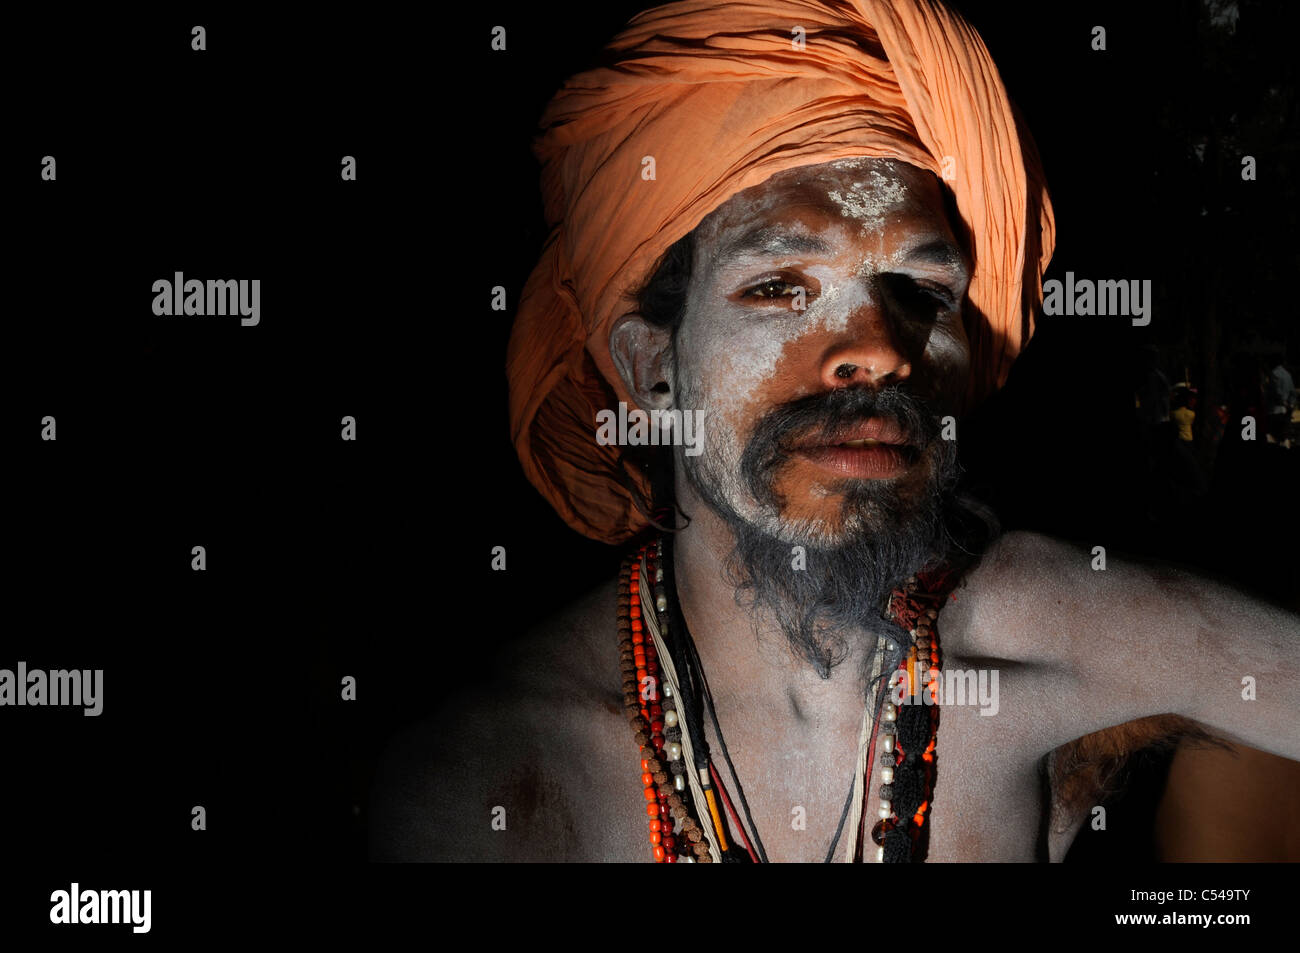 A sadhu (Hindu holy man) at the Kumbh Mela festival in India. Stock Photo